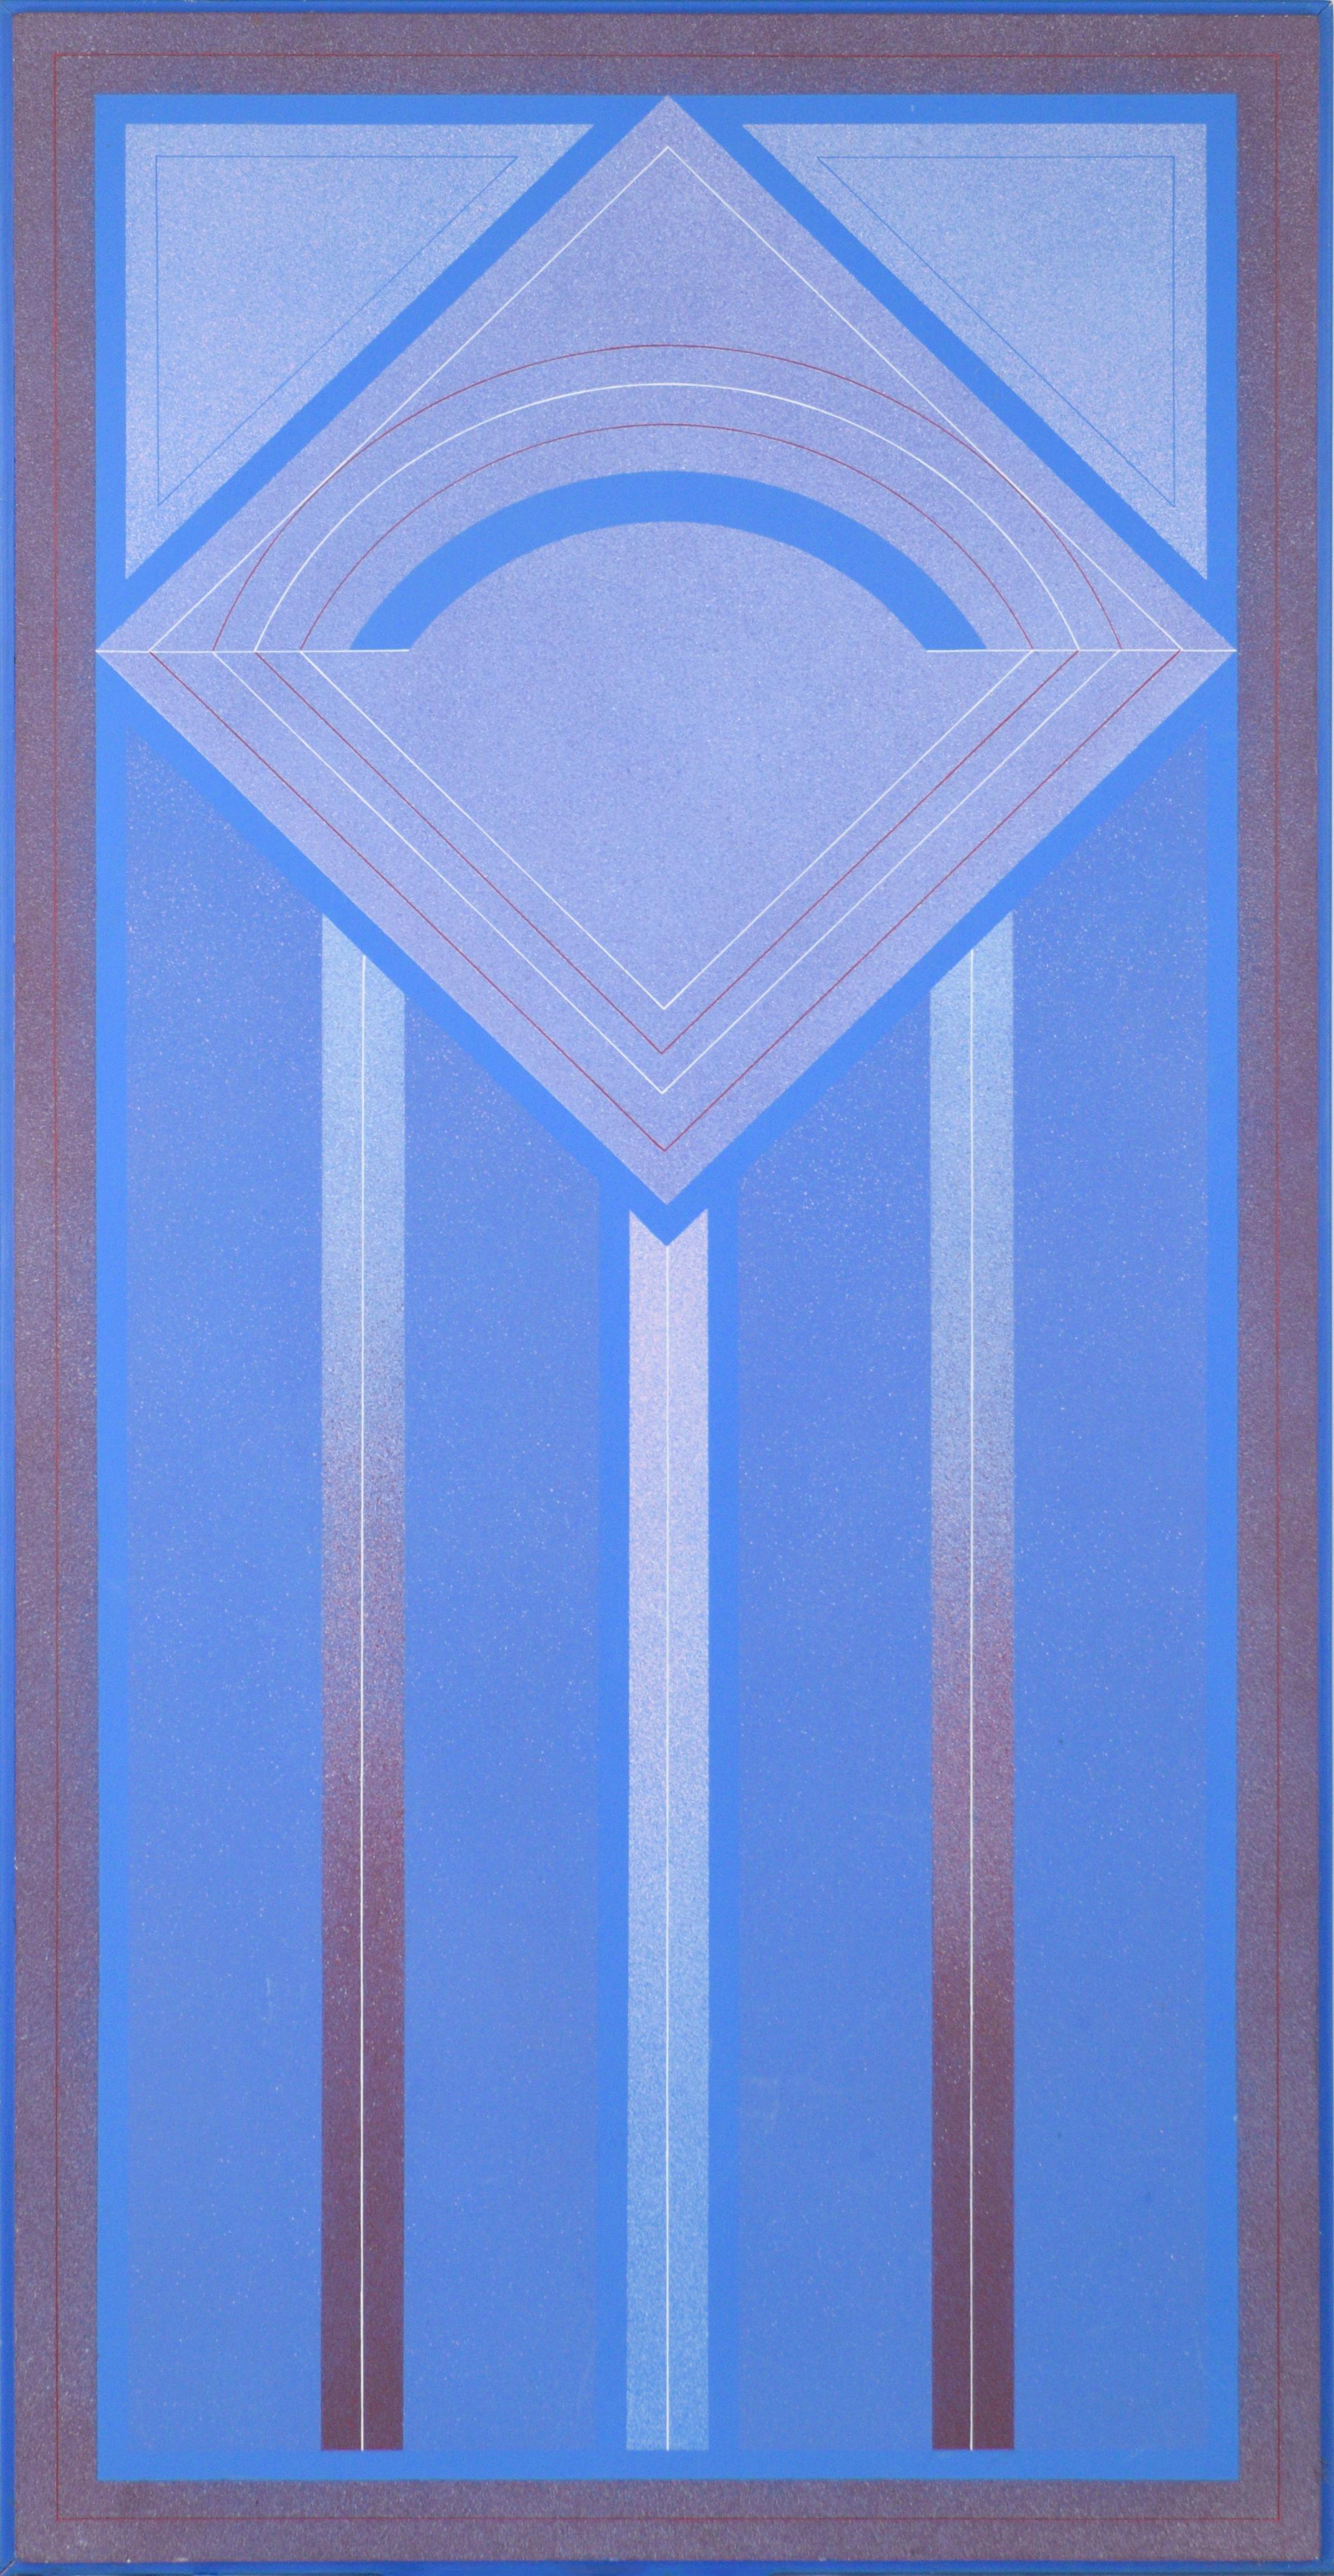 Arn Ghigliazza Abstract Painting - "Kiva IV" - 1970's Minimalist Geometric Abstract 